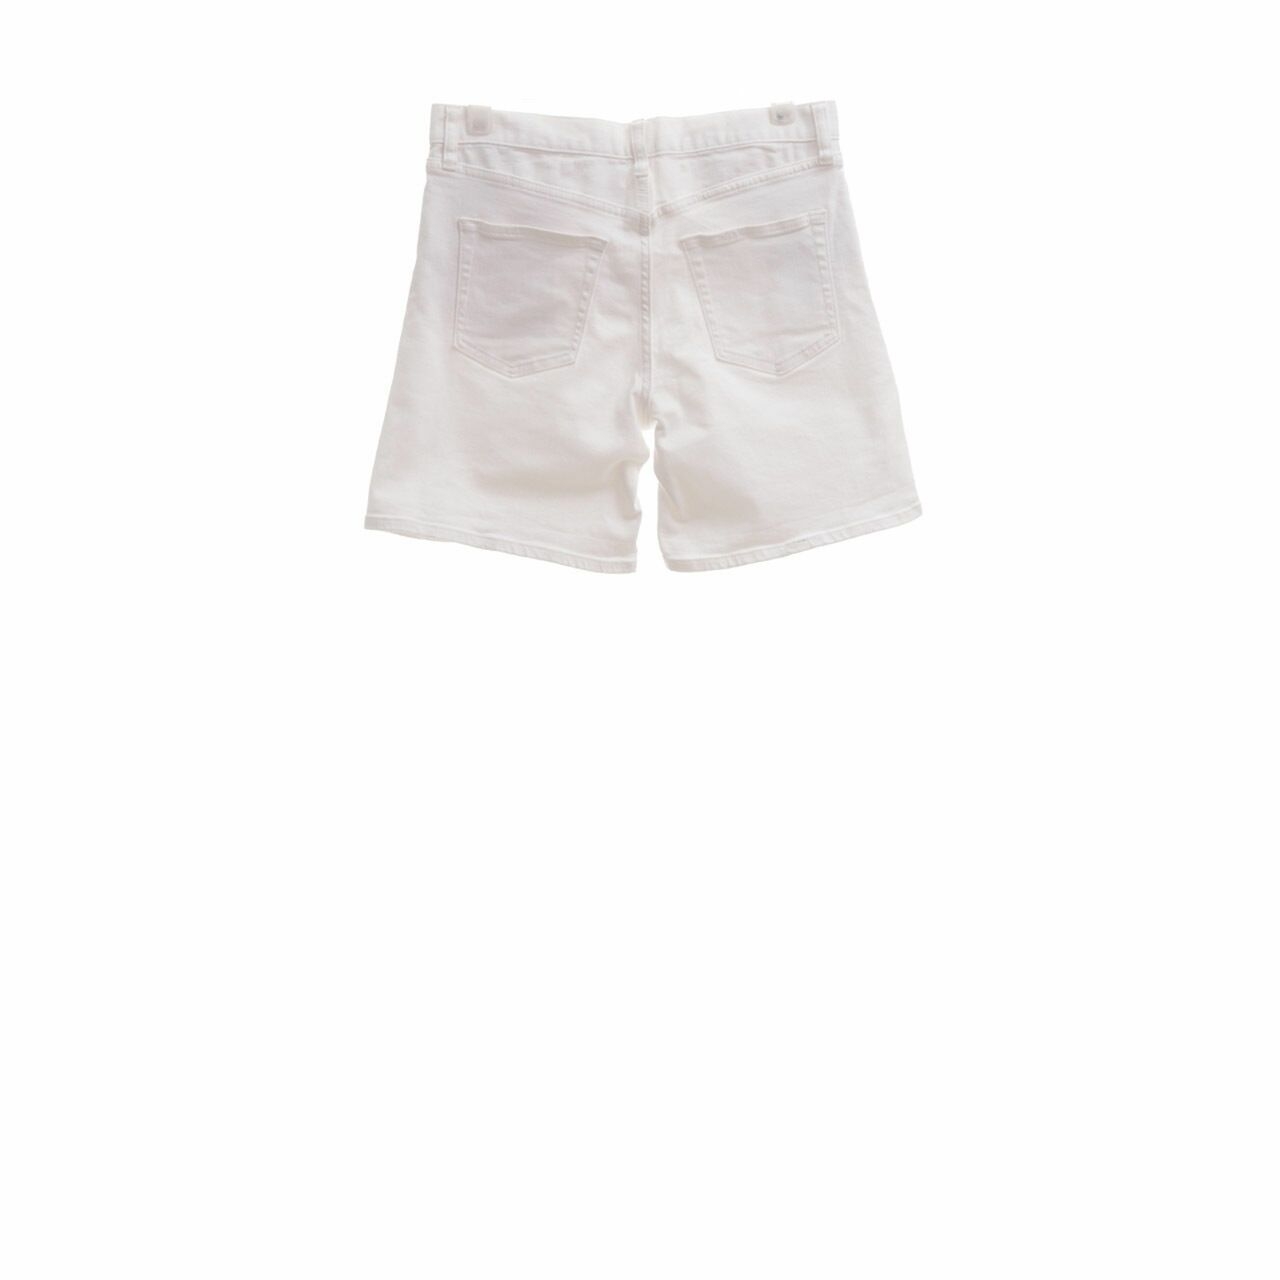 UNIQLO White Shorts Pants